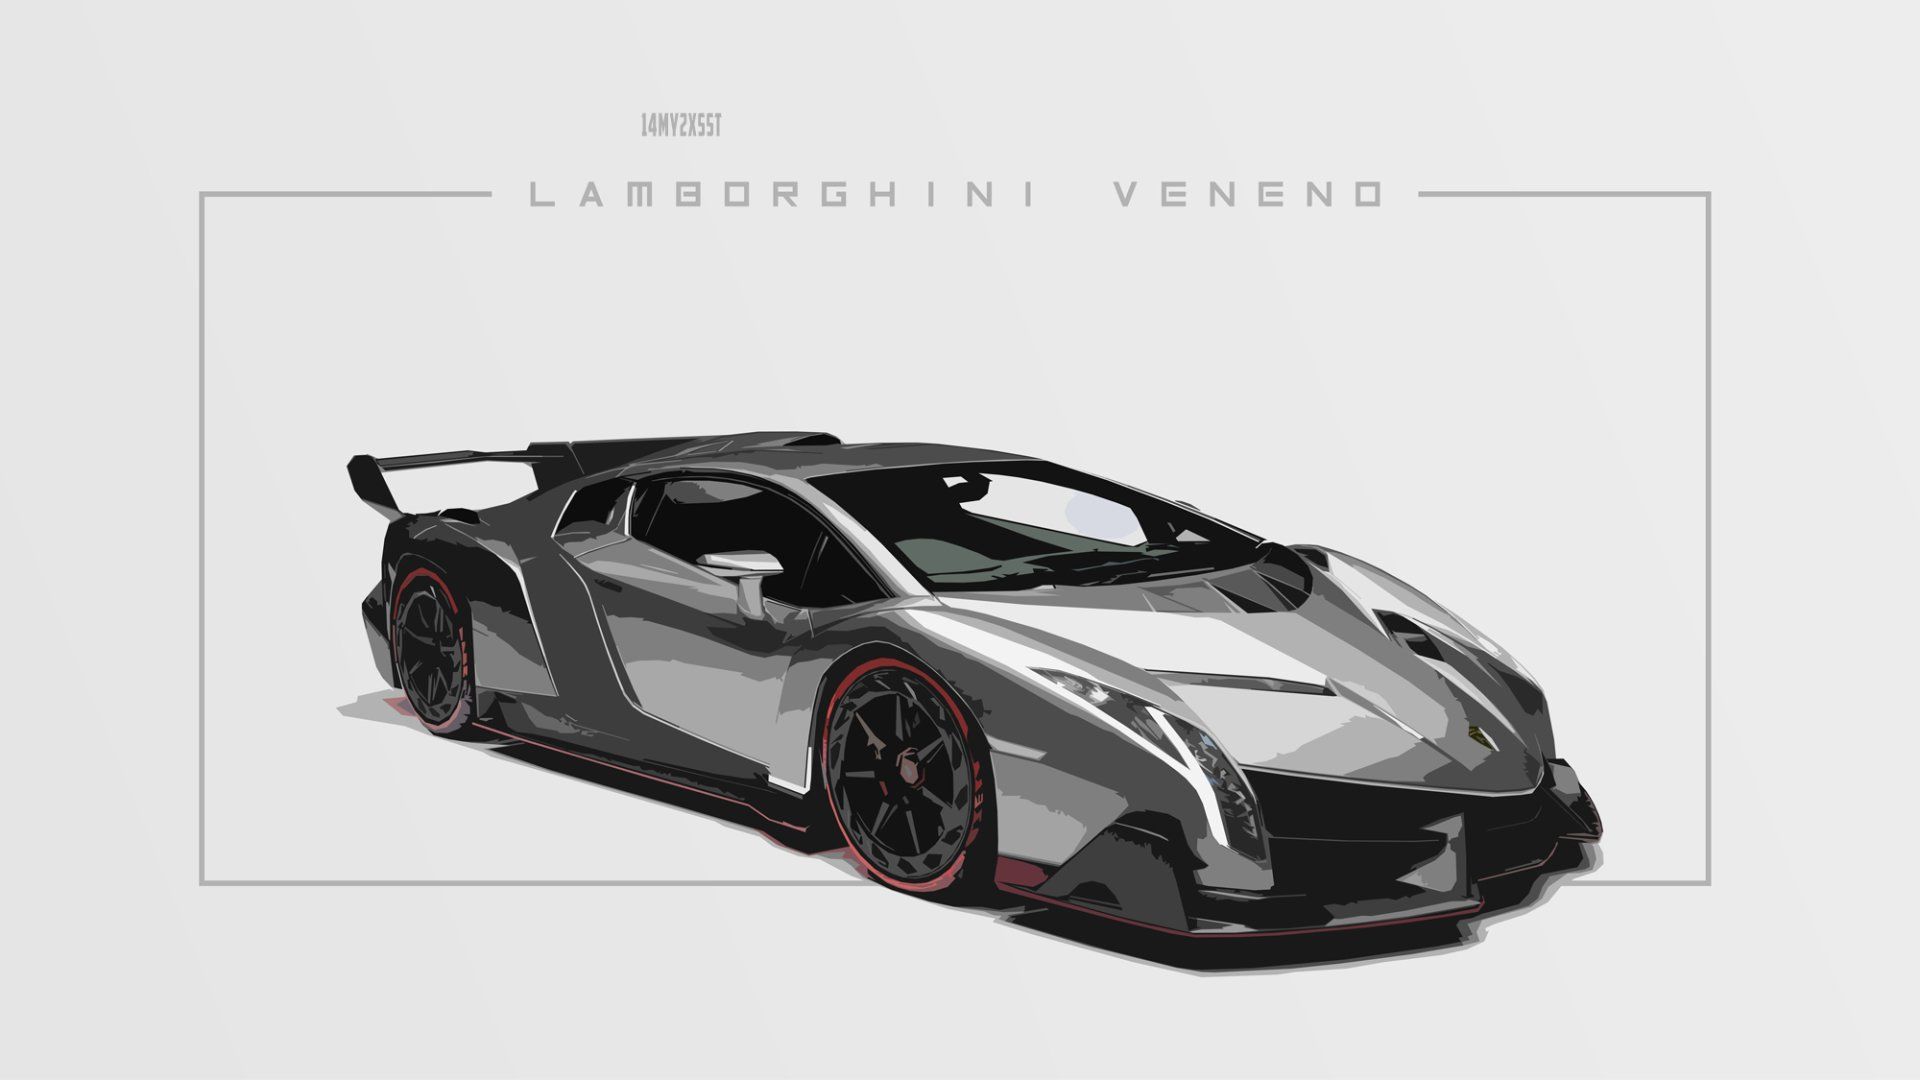 Zelko Radic Bfvrp On Cars New Lamborghini Veneno